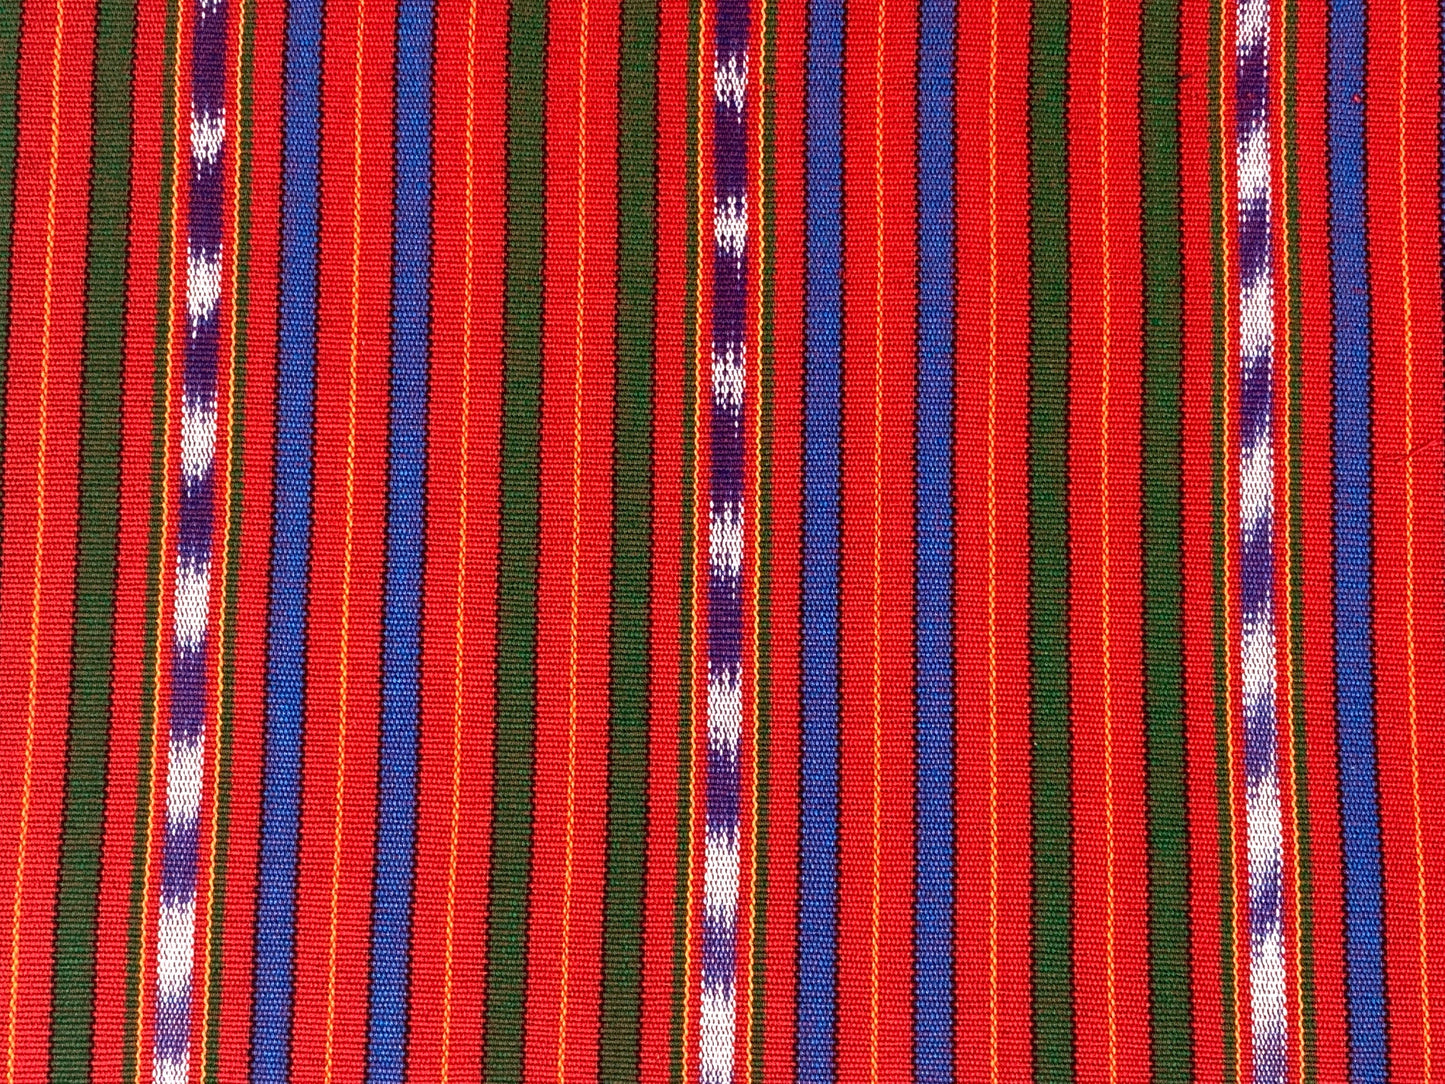 Handwoven Guatemalan Bright Red, Blue & Green Ikat Stripes